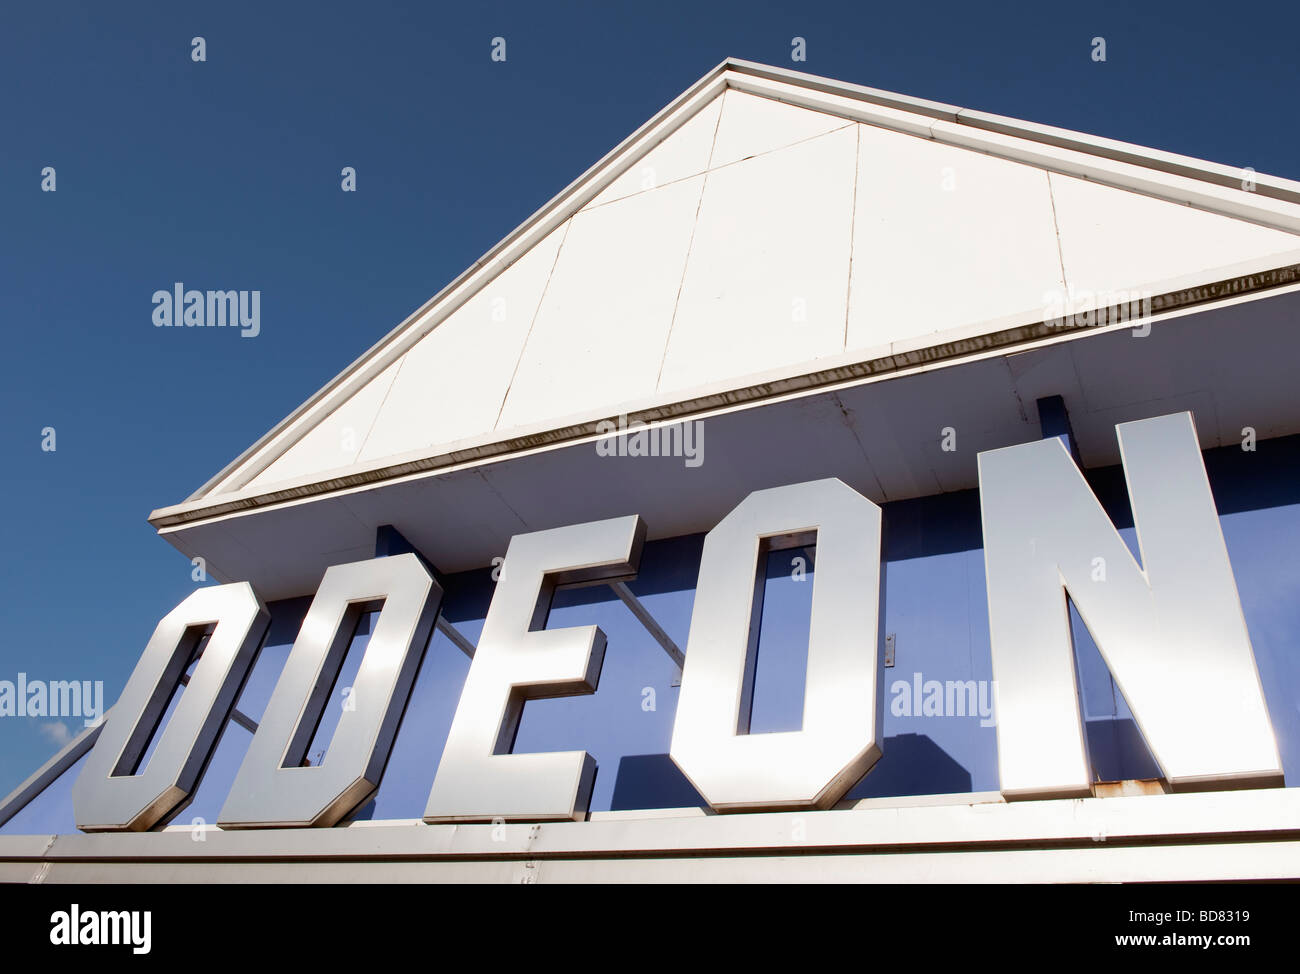 'Odeon cinema'  sign Stock Photo